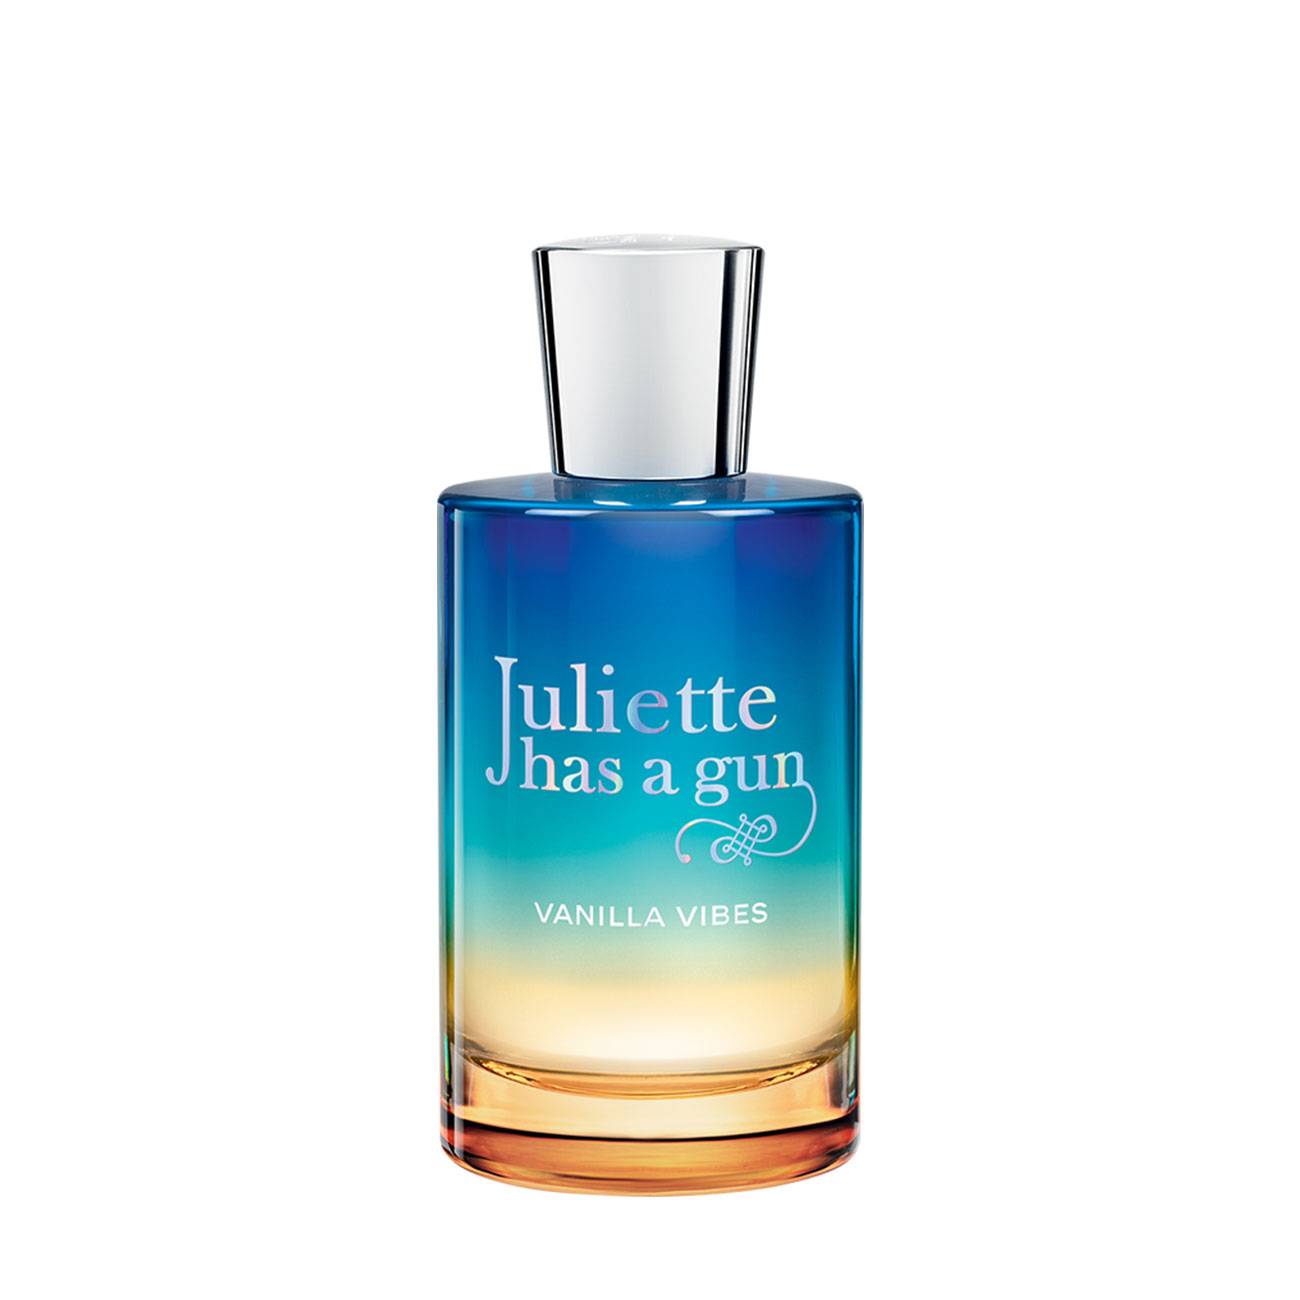 Parfum de niche Juliette has a gun VANILLA VIBES 100ml cu comanda online